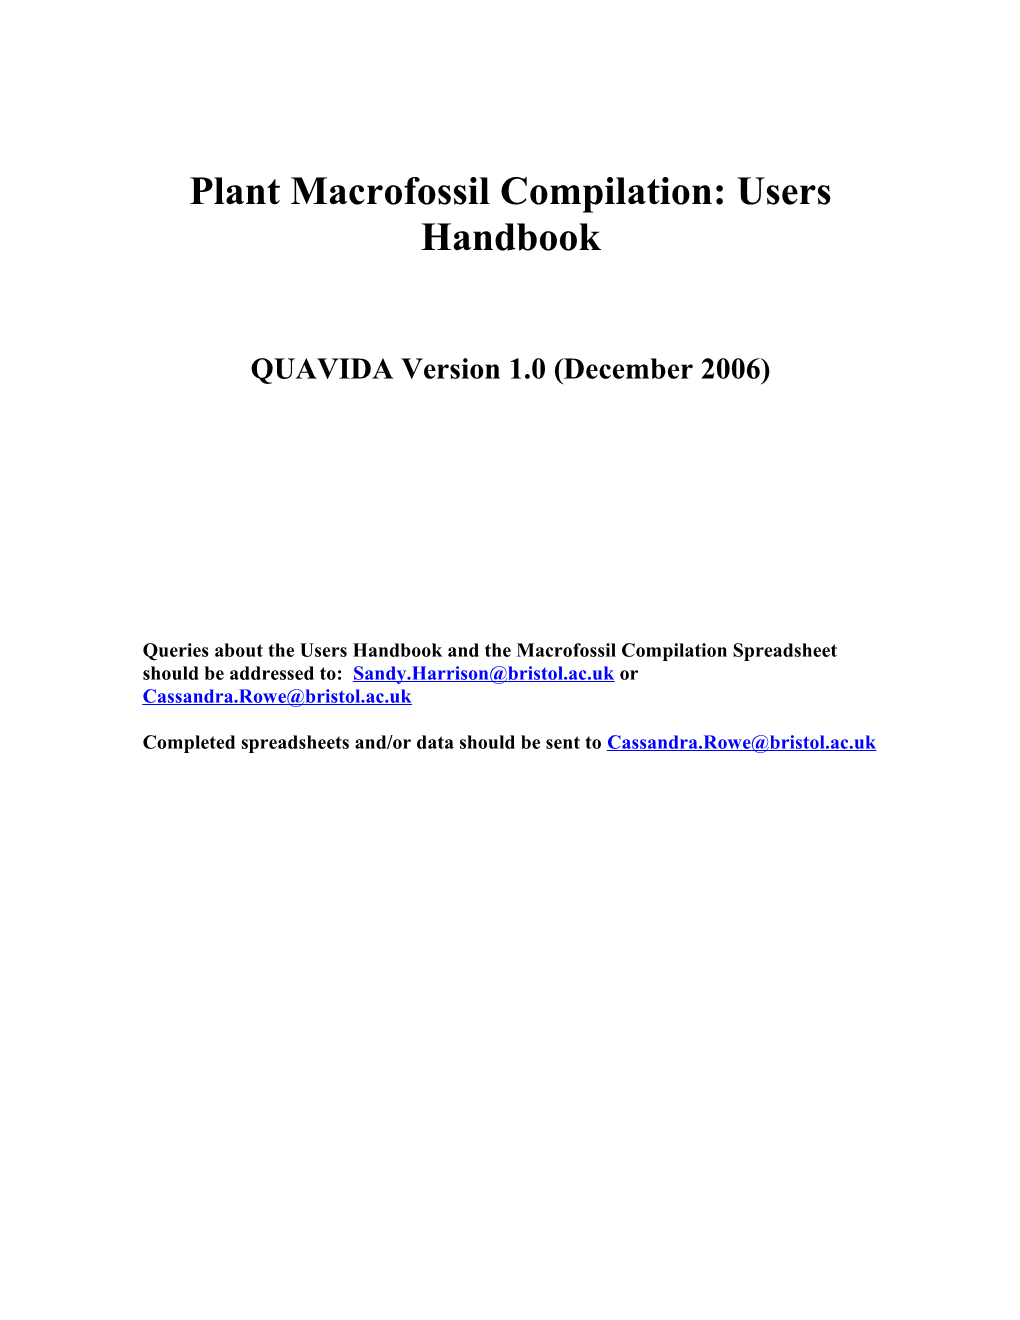 Macrofossil Compilation: Users Handbook